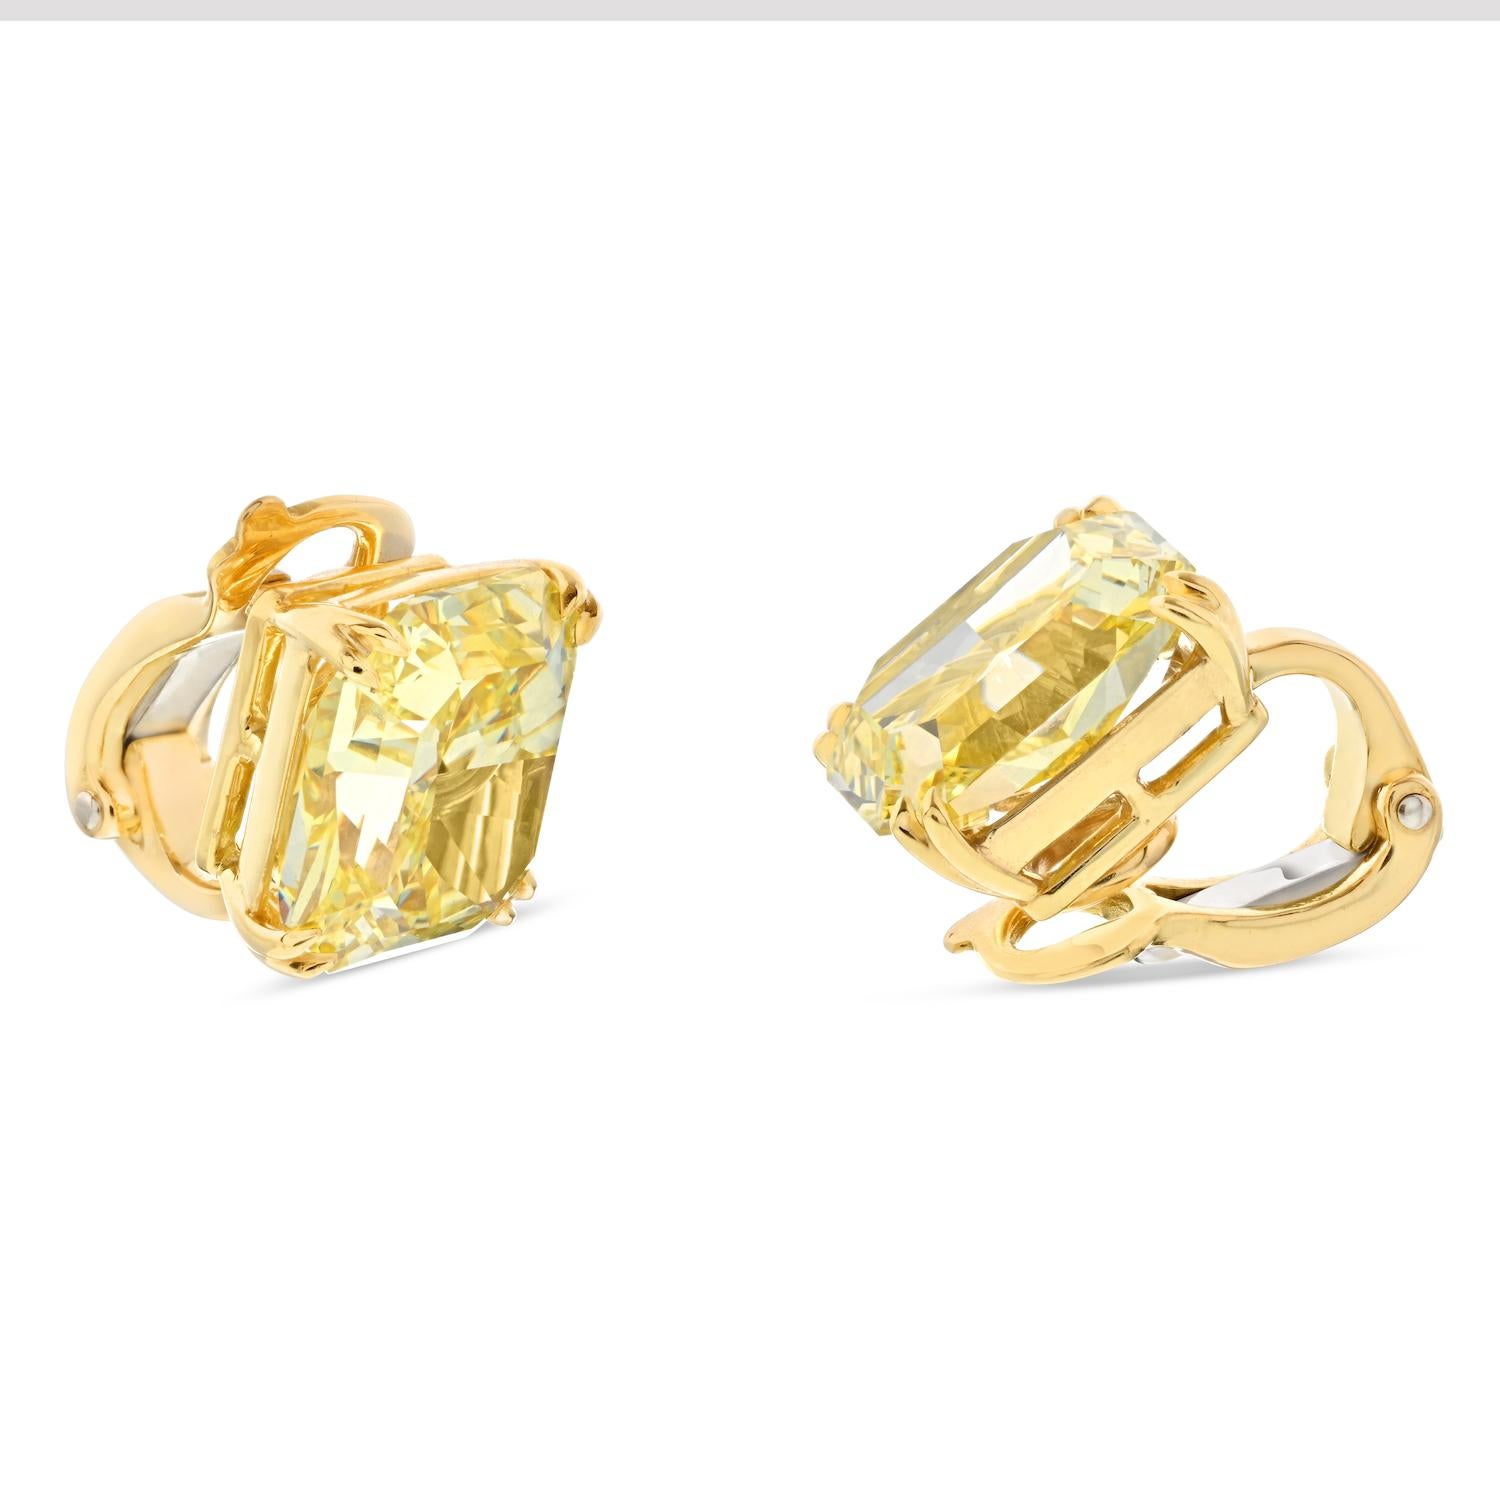 Modern Gold and 12.09ct Radiant Cut Fancy Intense Yellow Diamond Stud Earrings